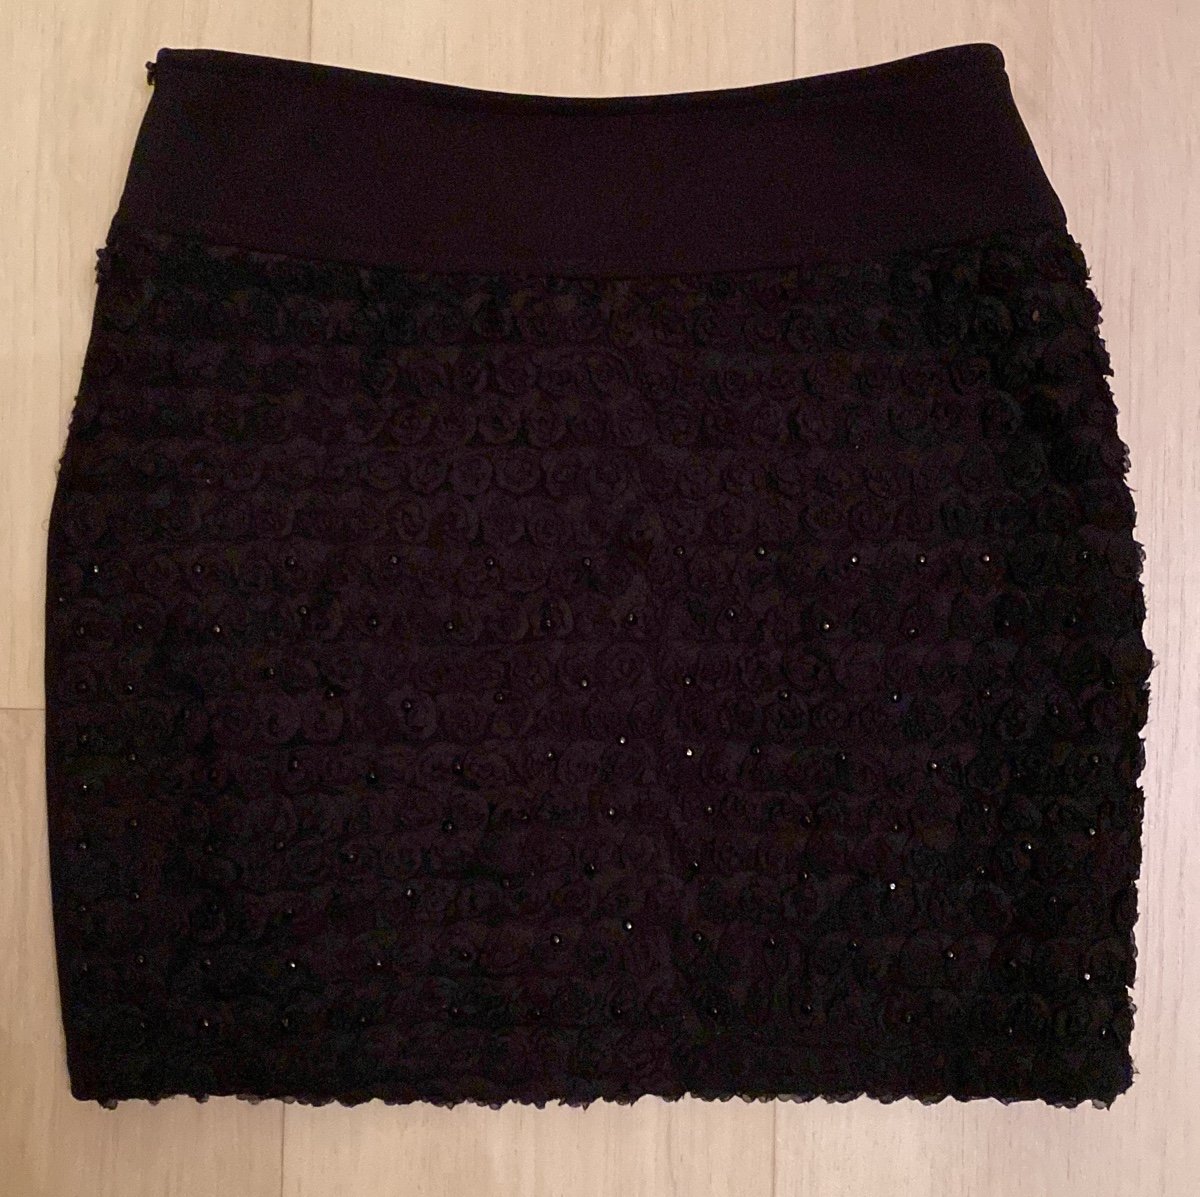 Wholesale price Women Black Skirt XS KrS9cG7Dc outlet o